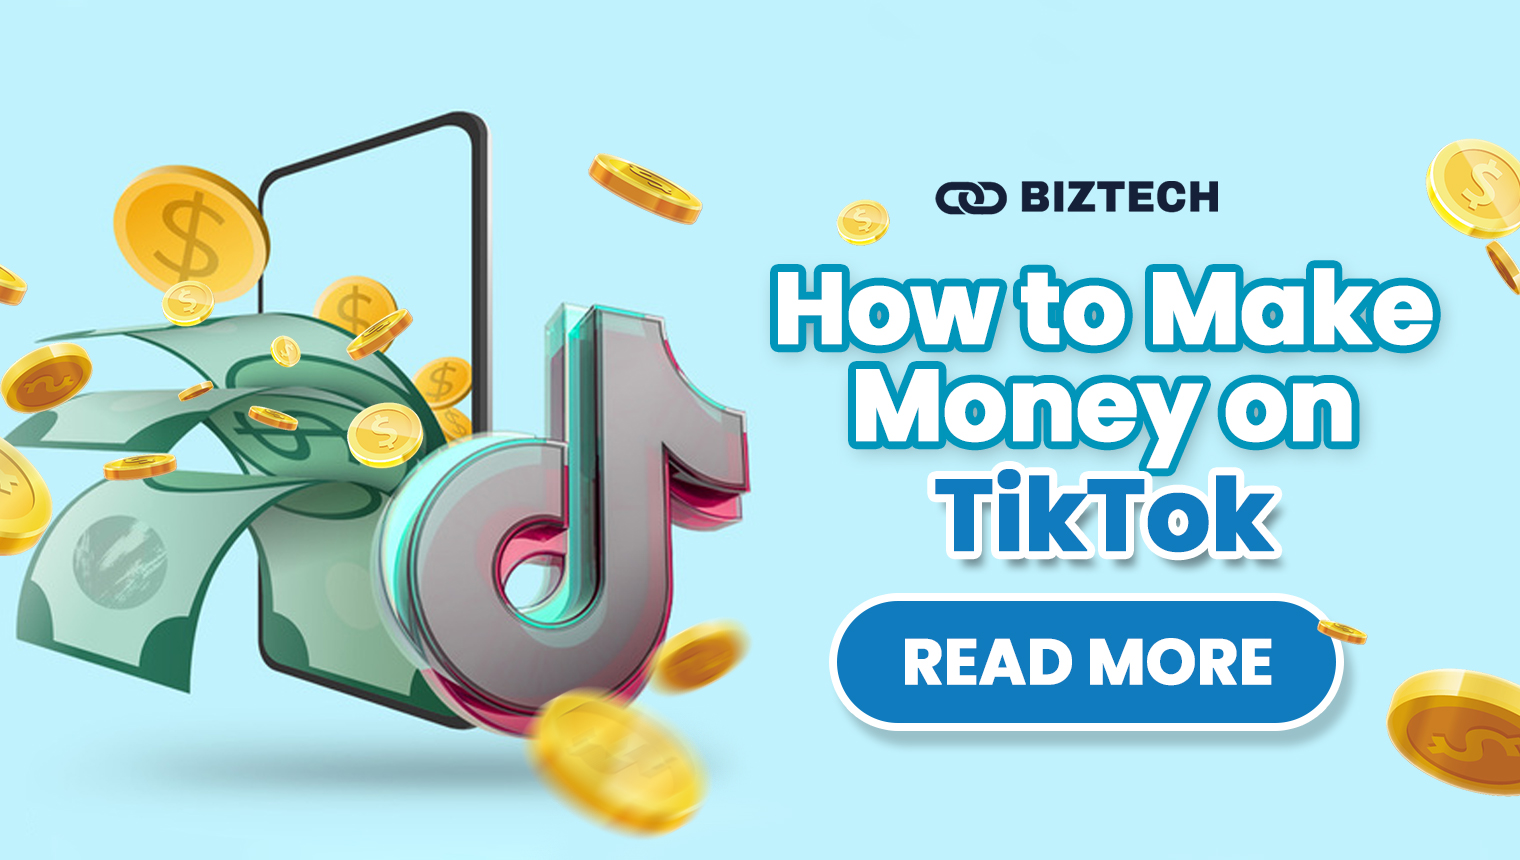 How to Make Money on TikTok